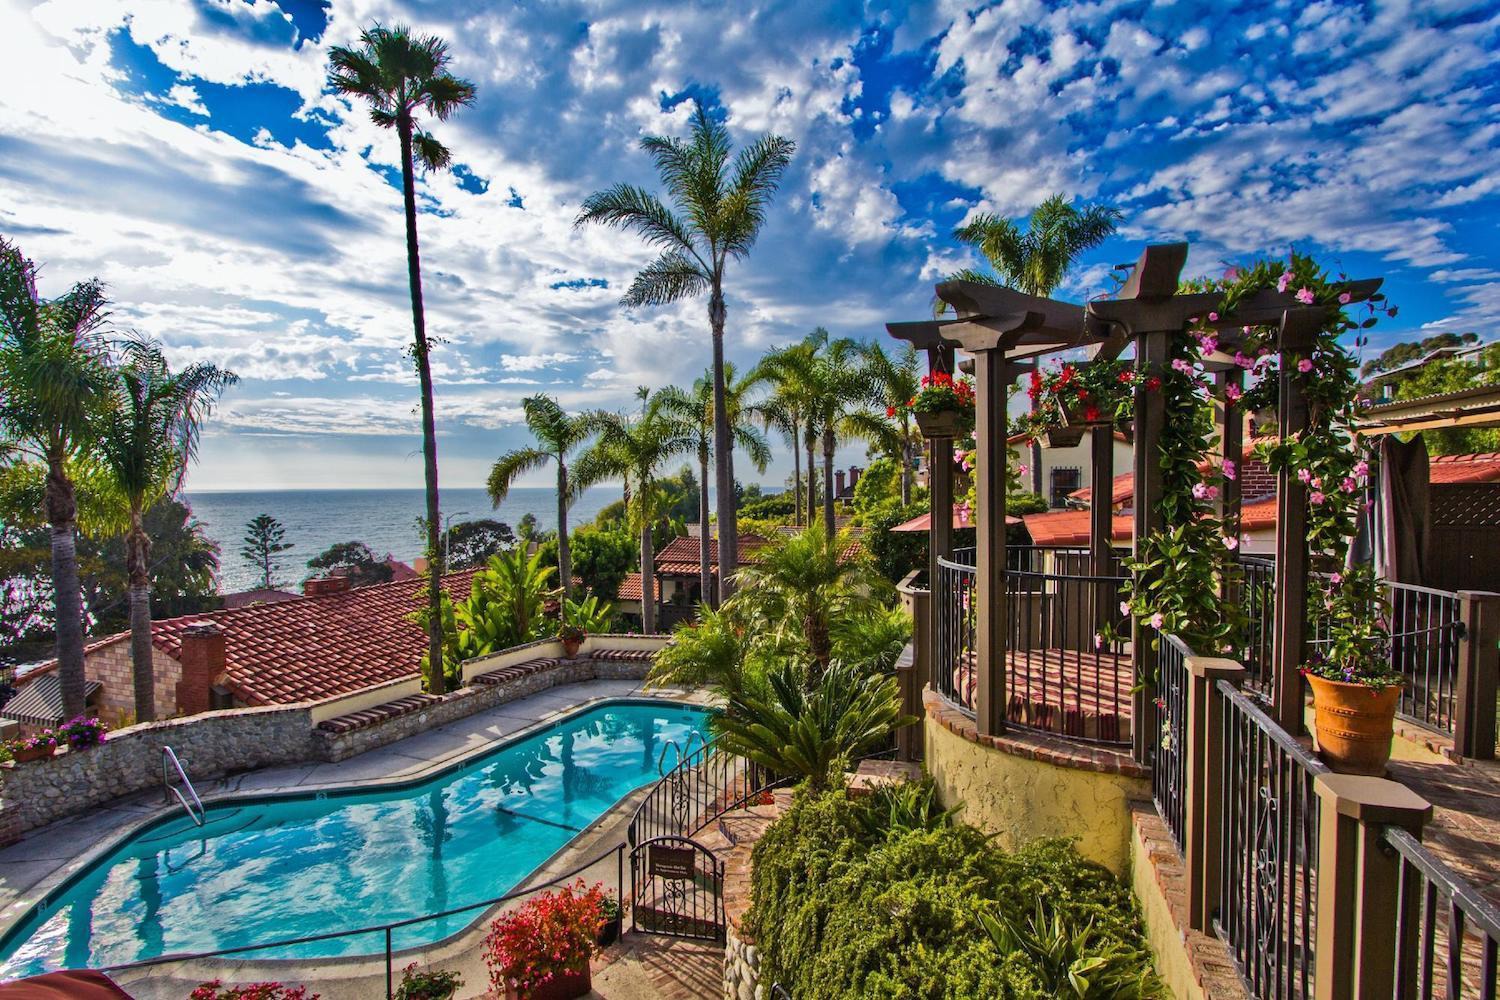 Photo of Casa Laguna Hotel & Spa, Laguna Beach, CA